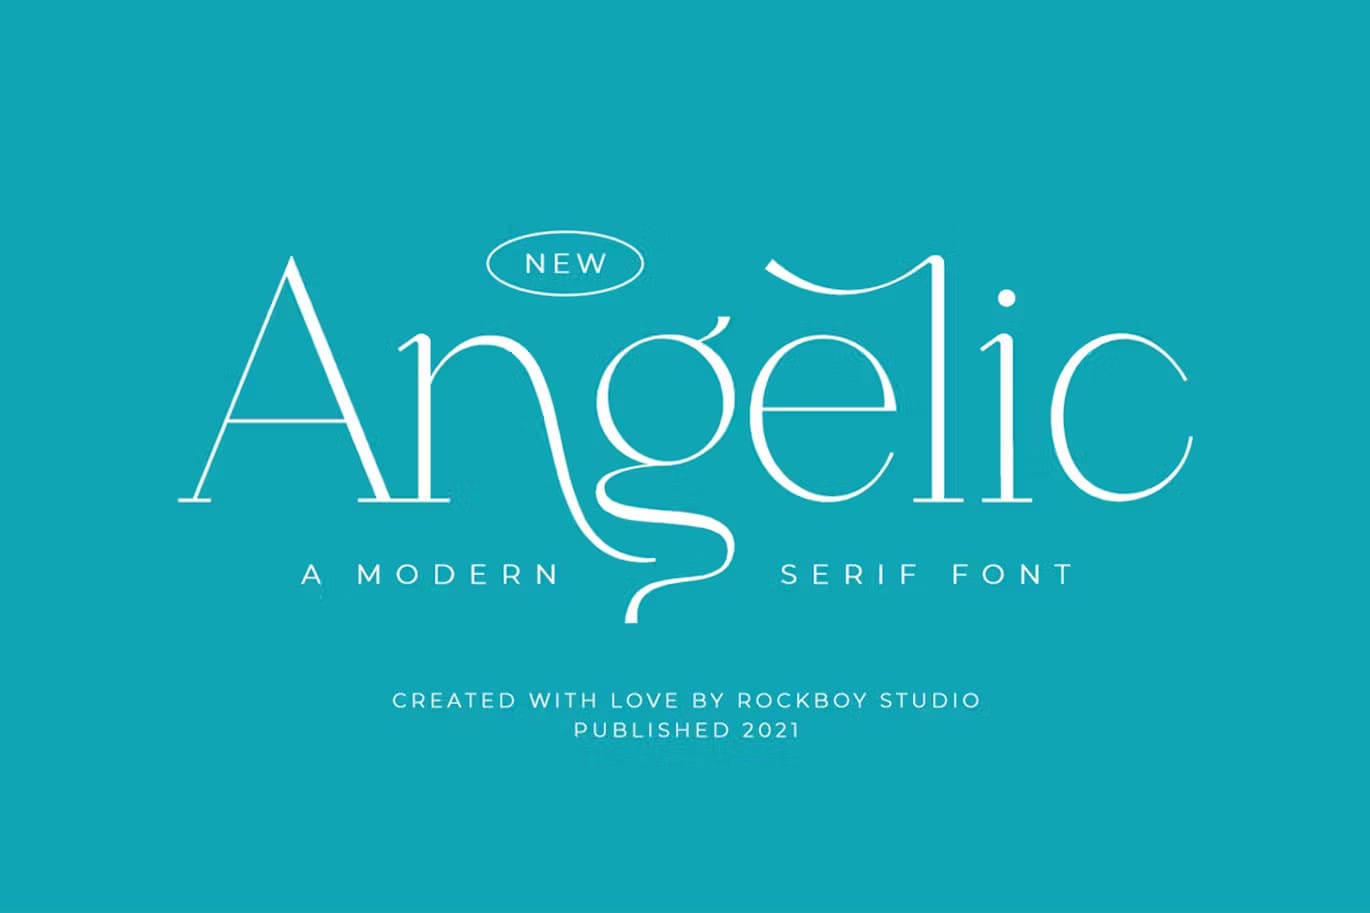 A modern serif font